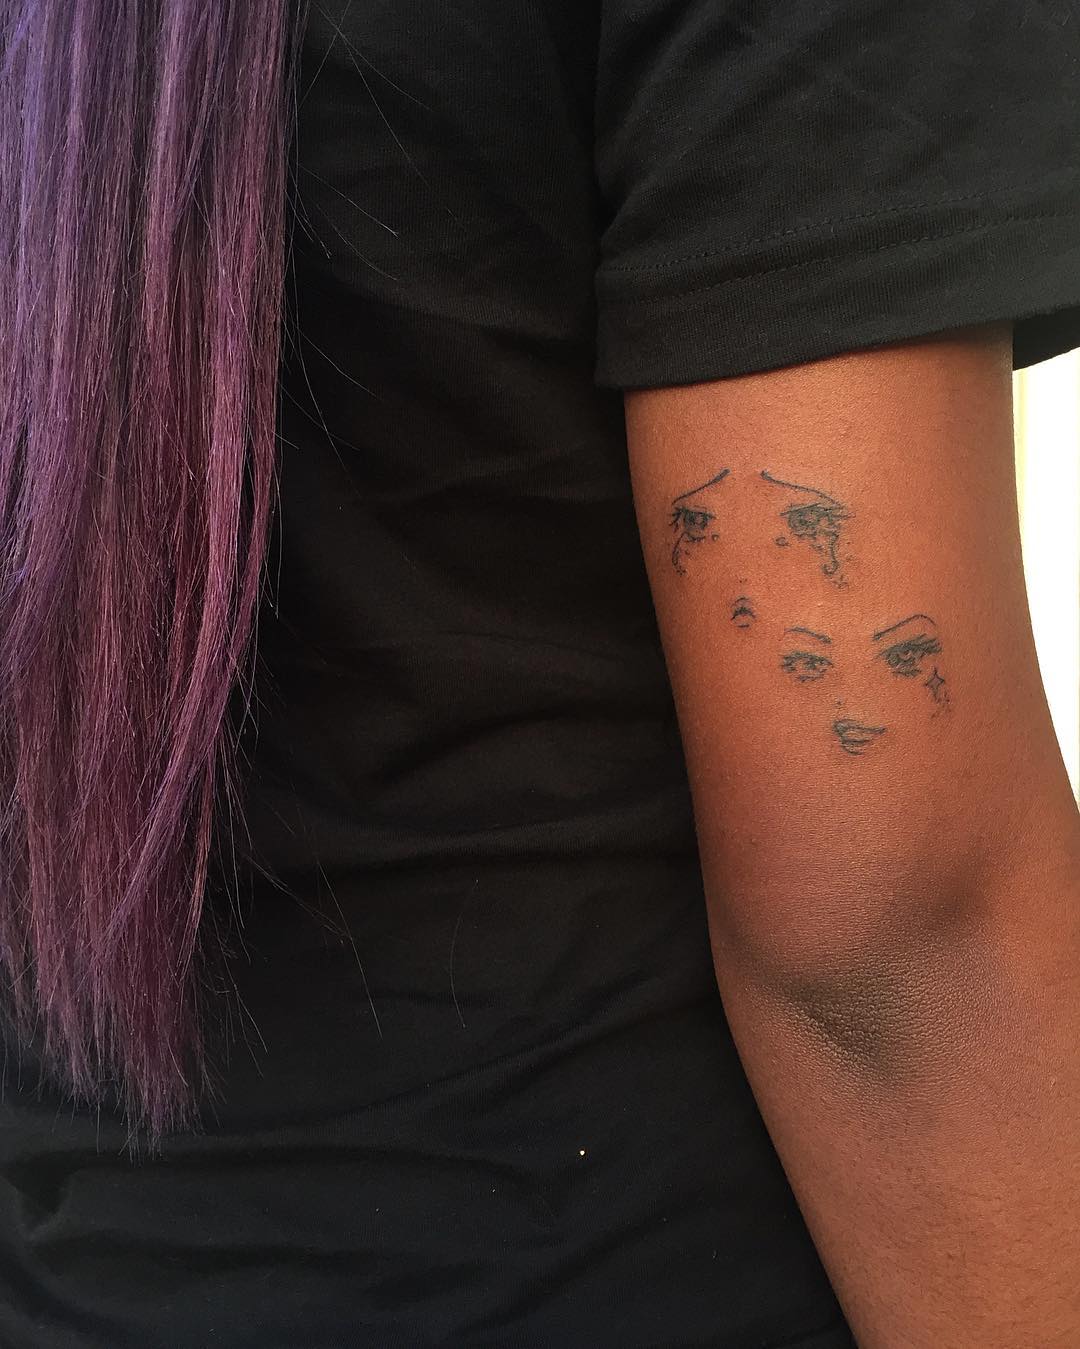 Justine Skye Mask Upper Arm Tattoo | Steal Her Style